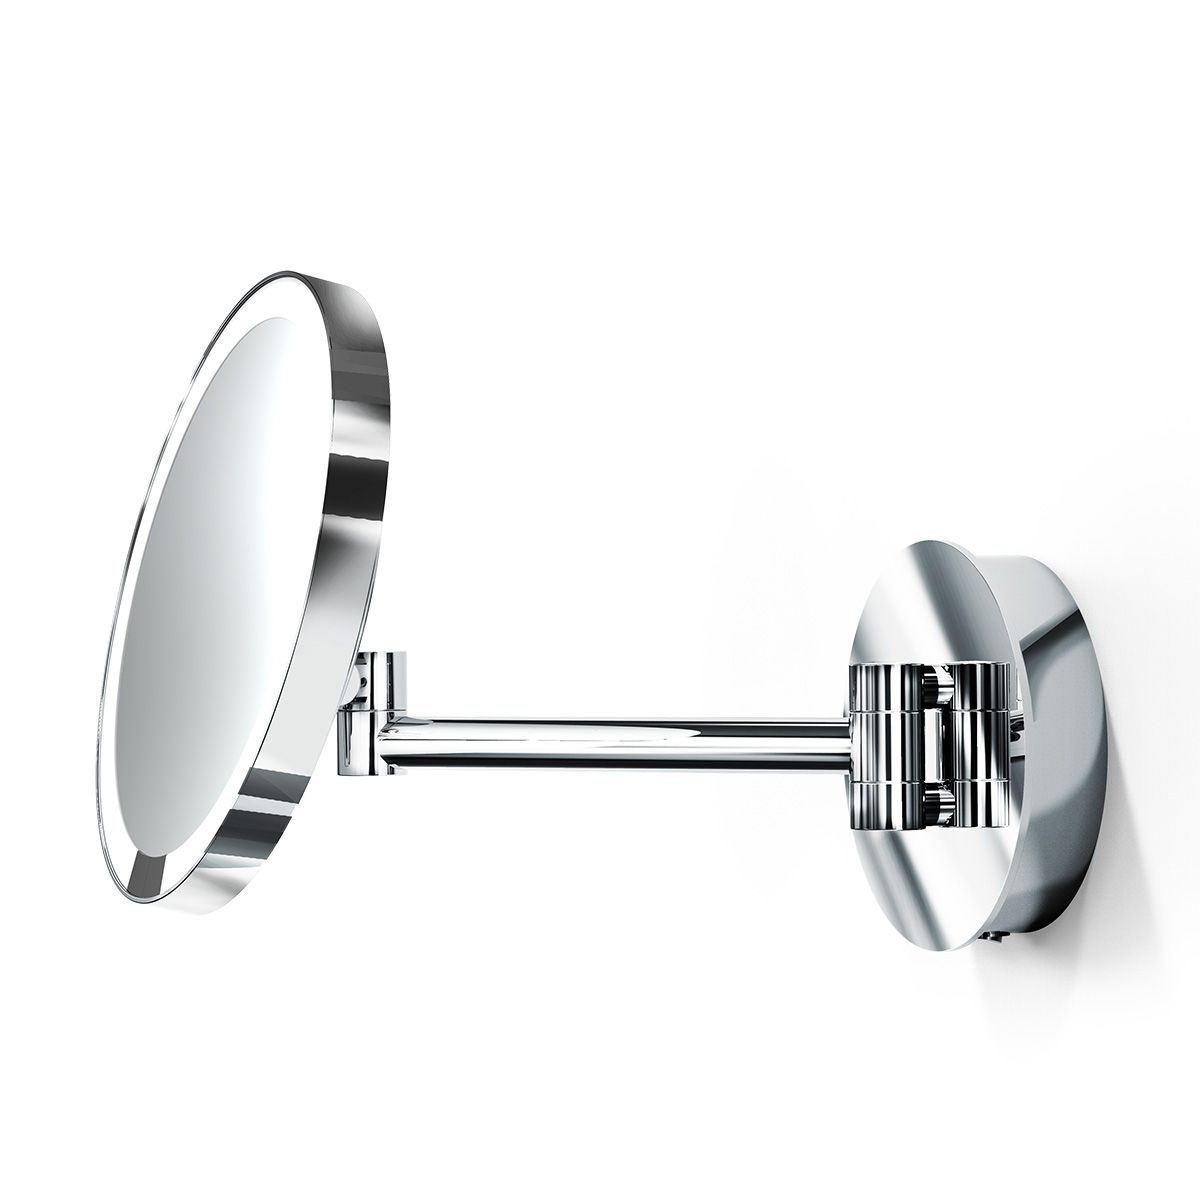 Sensor Magnifying Mirrors